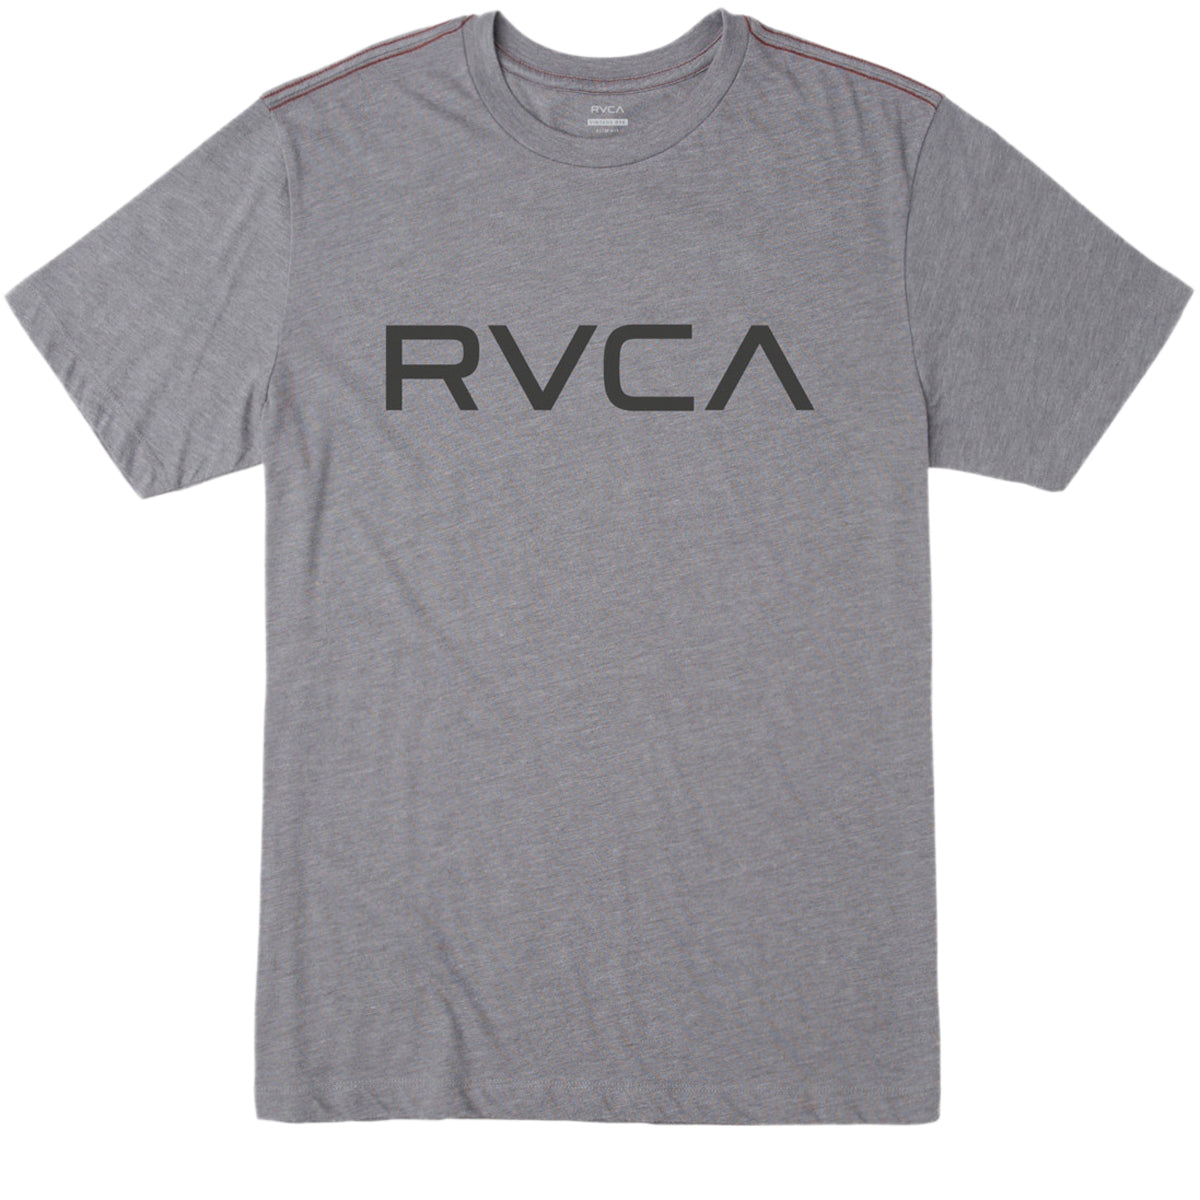 RVCA Big T-Shirt - Smoke Black image 1